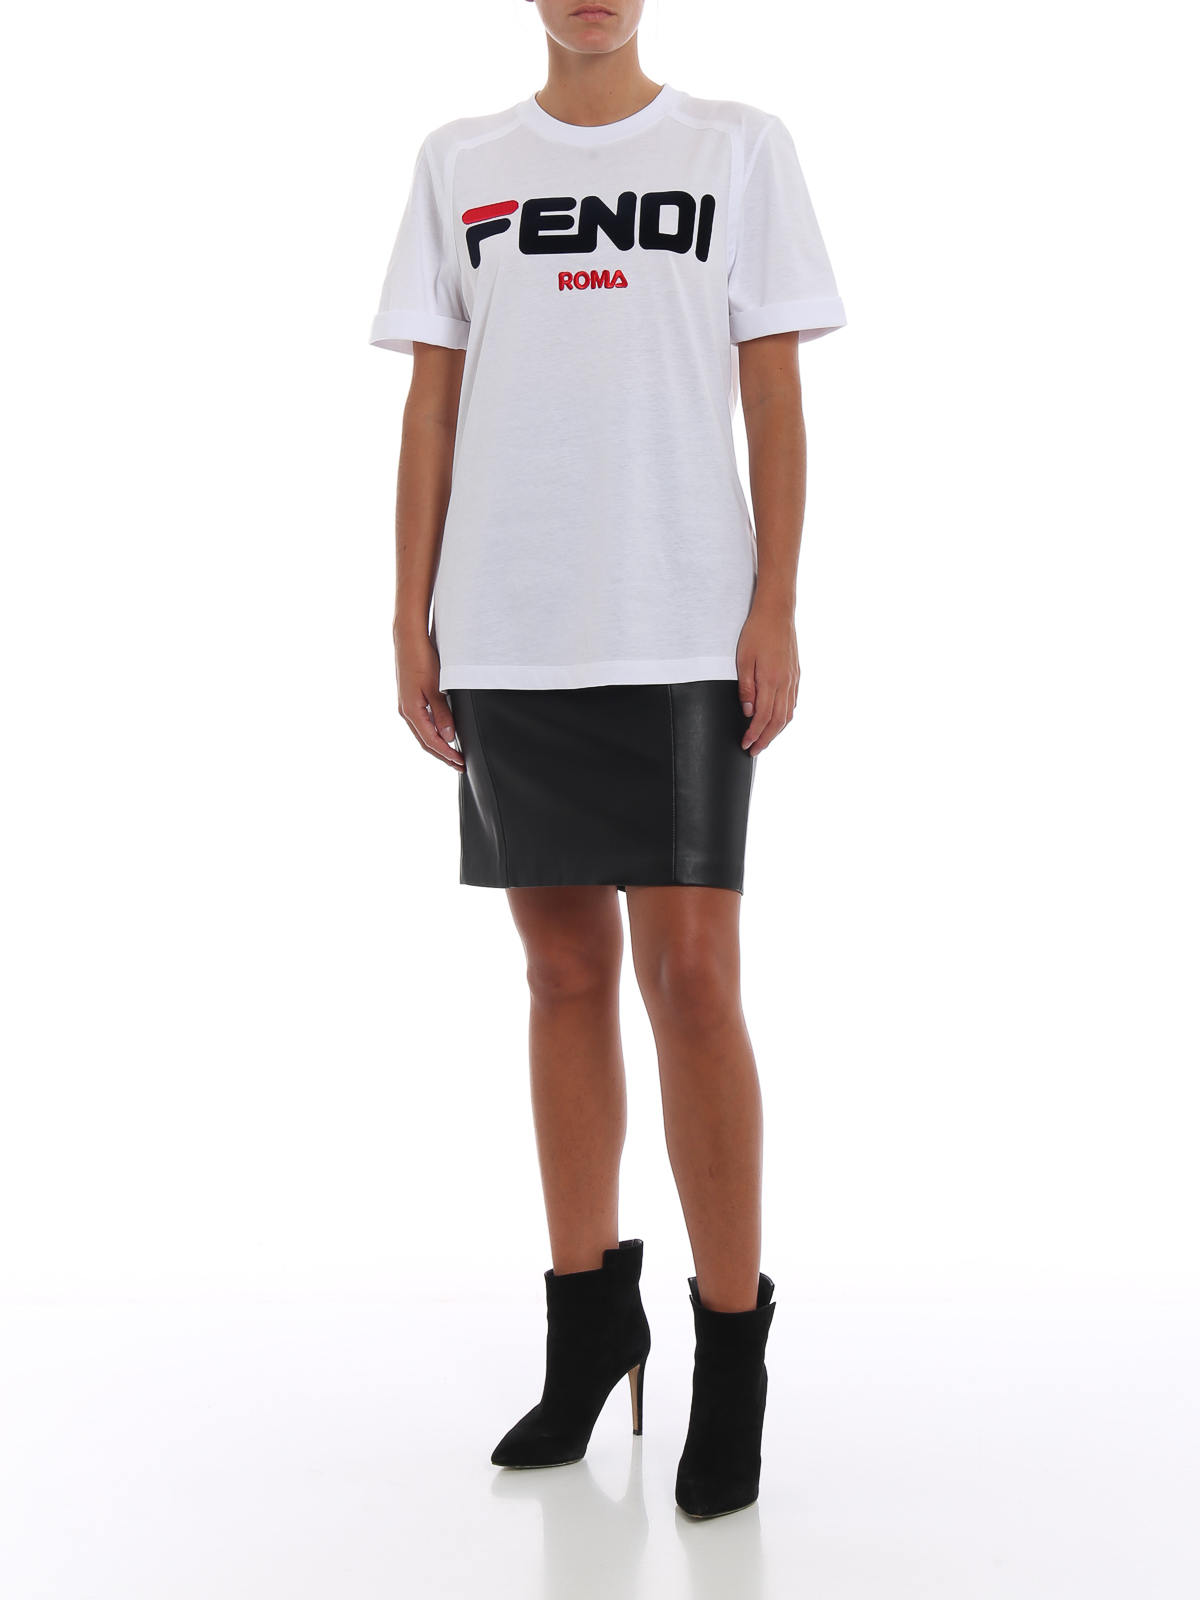 Tシャツ Fendi - Tシャツ - Fendi Fila - FS7074A5H1ZNM | iKRIX.com